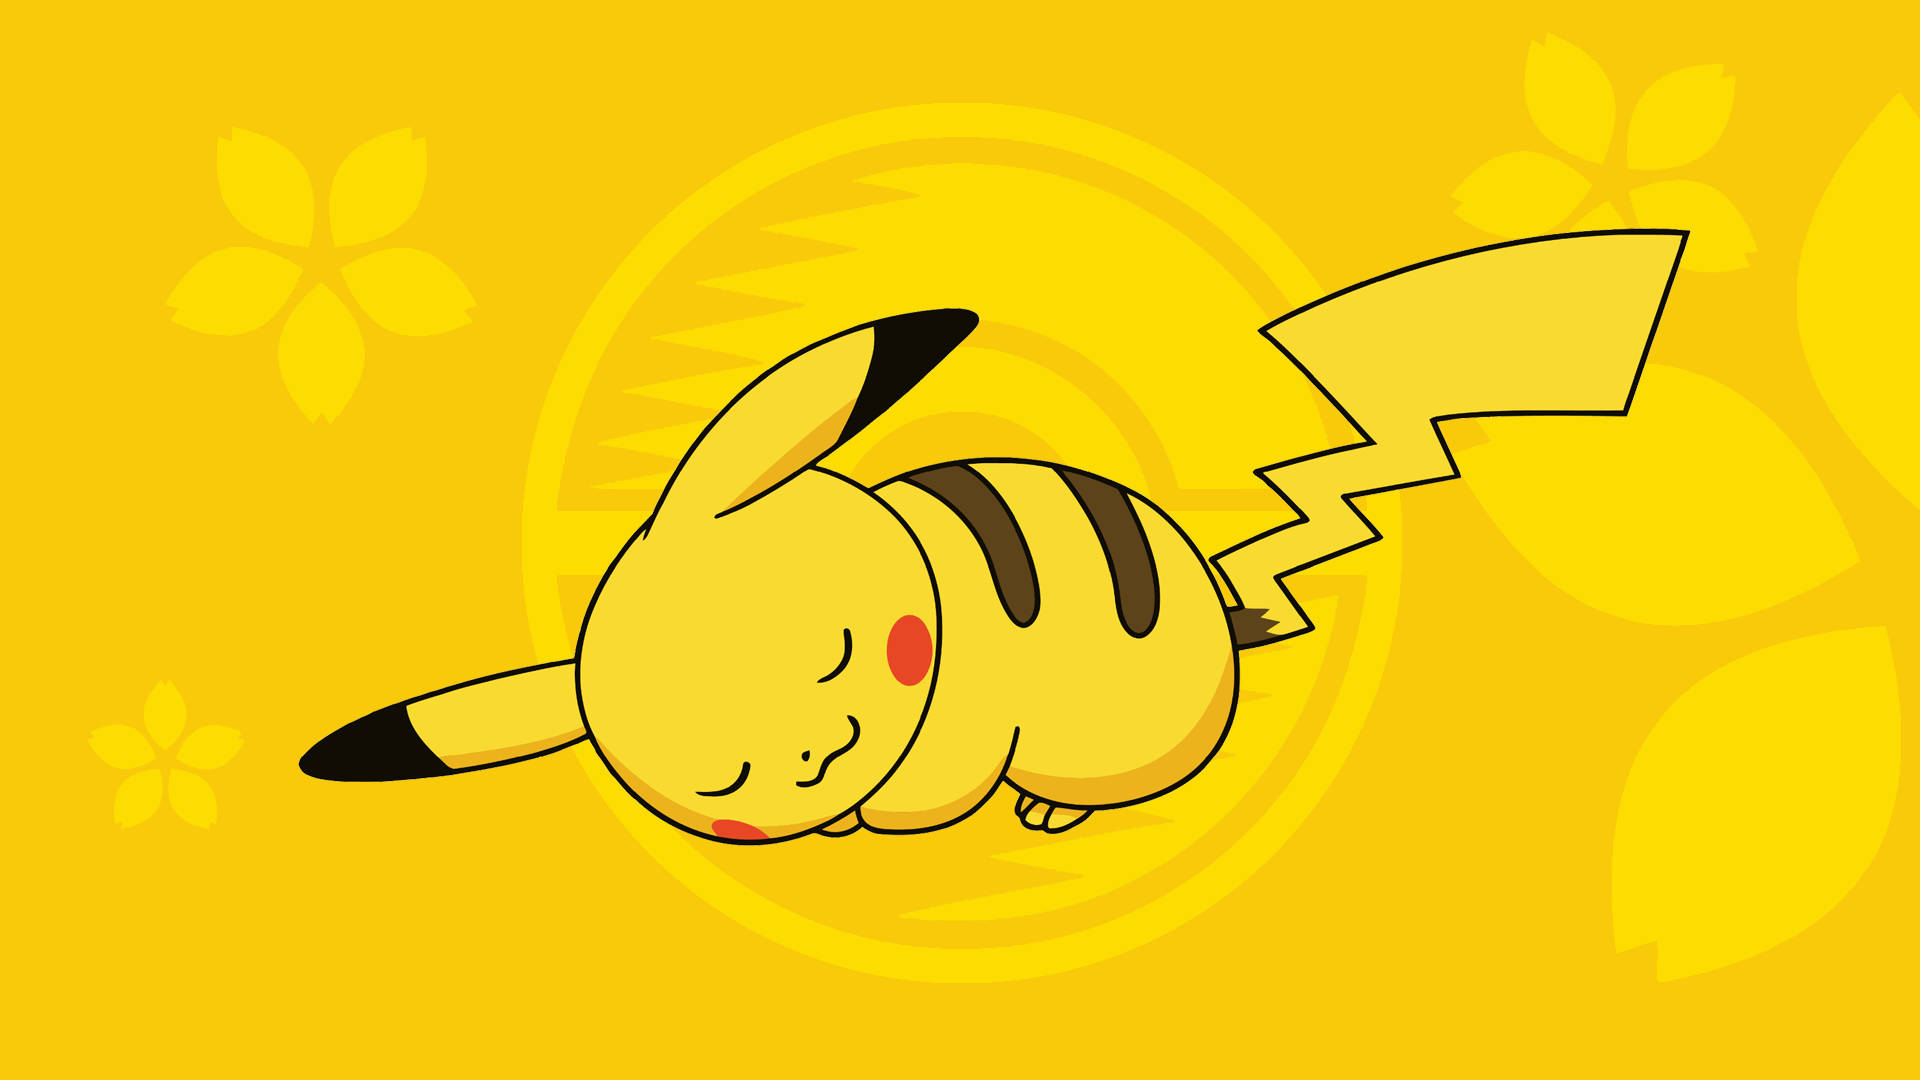 Pikachu 3d Peaceful Electric Type Pokémon Background